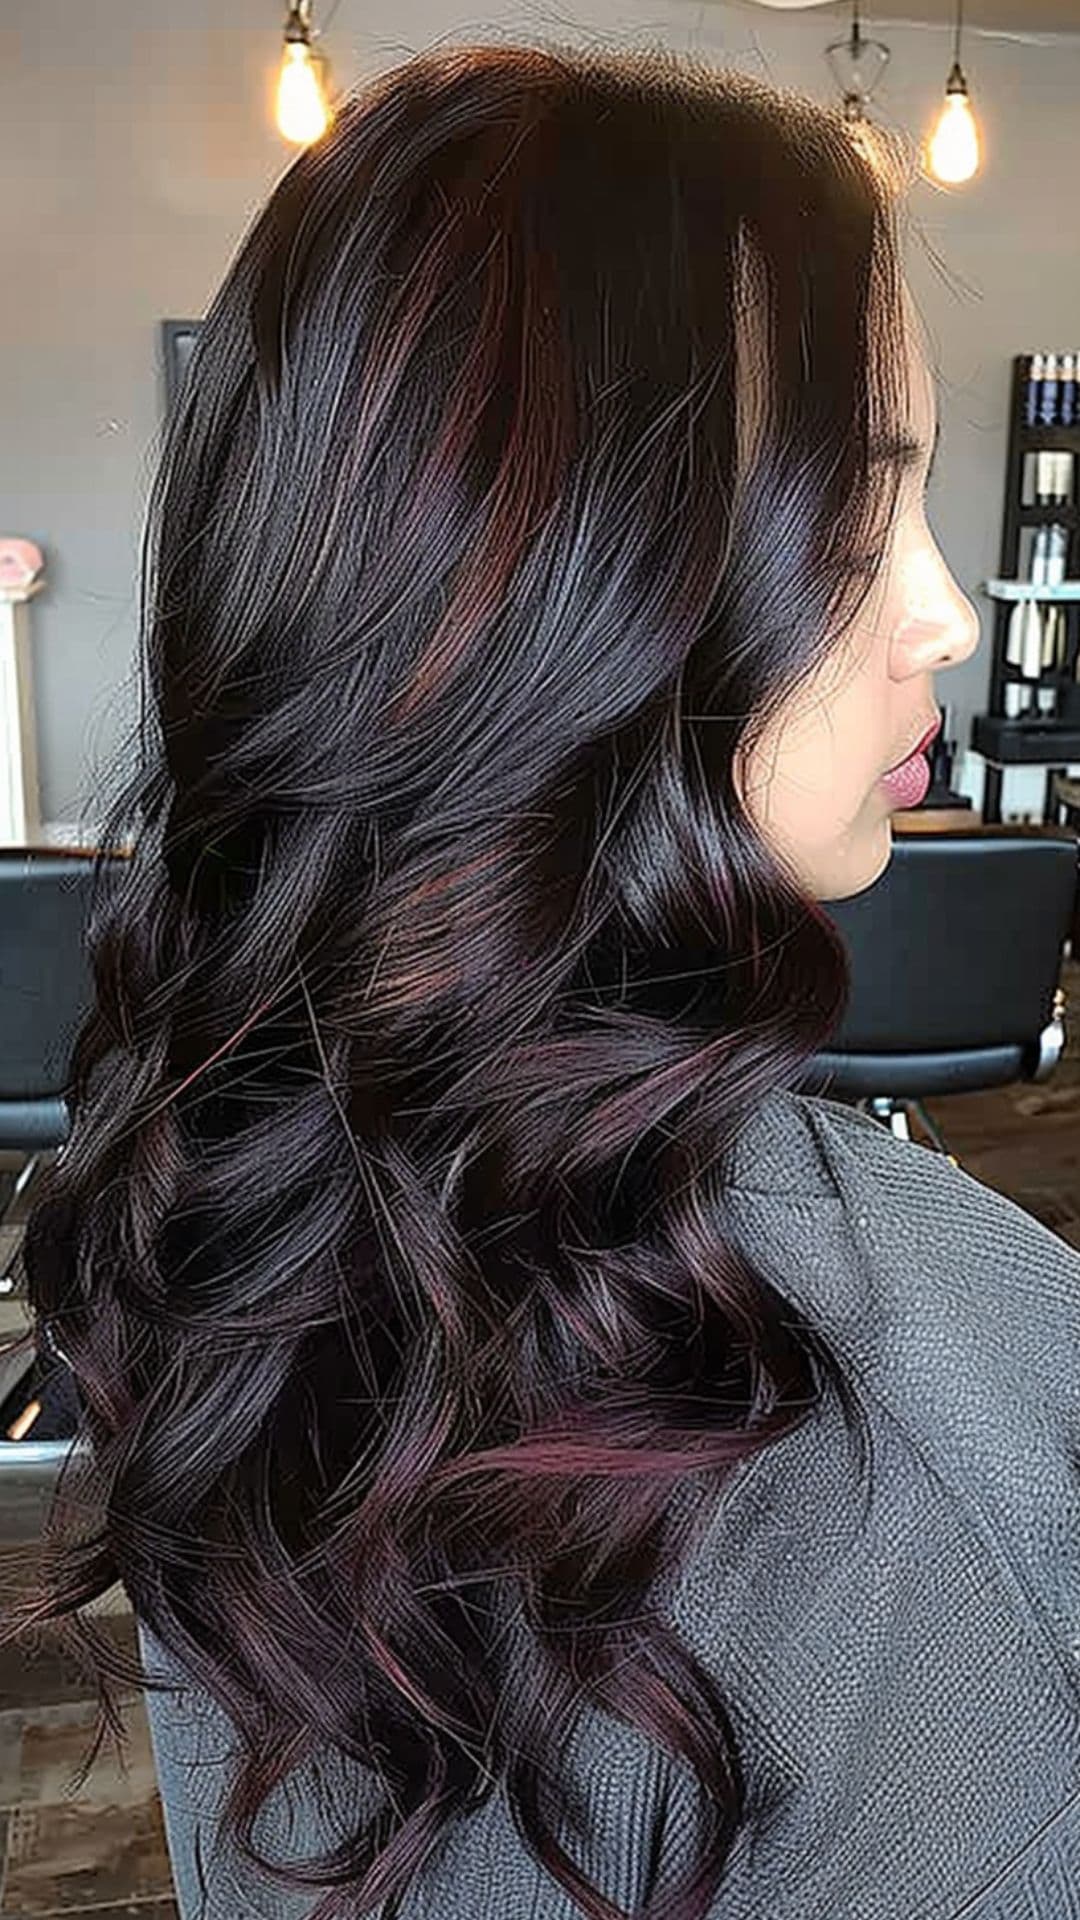 A woman modelling a dark hair with subtle burgundy highlights.